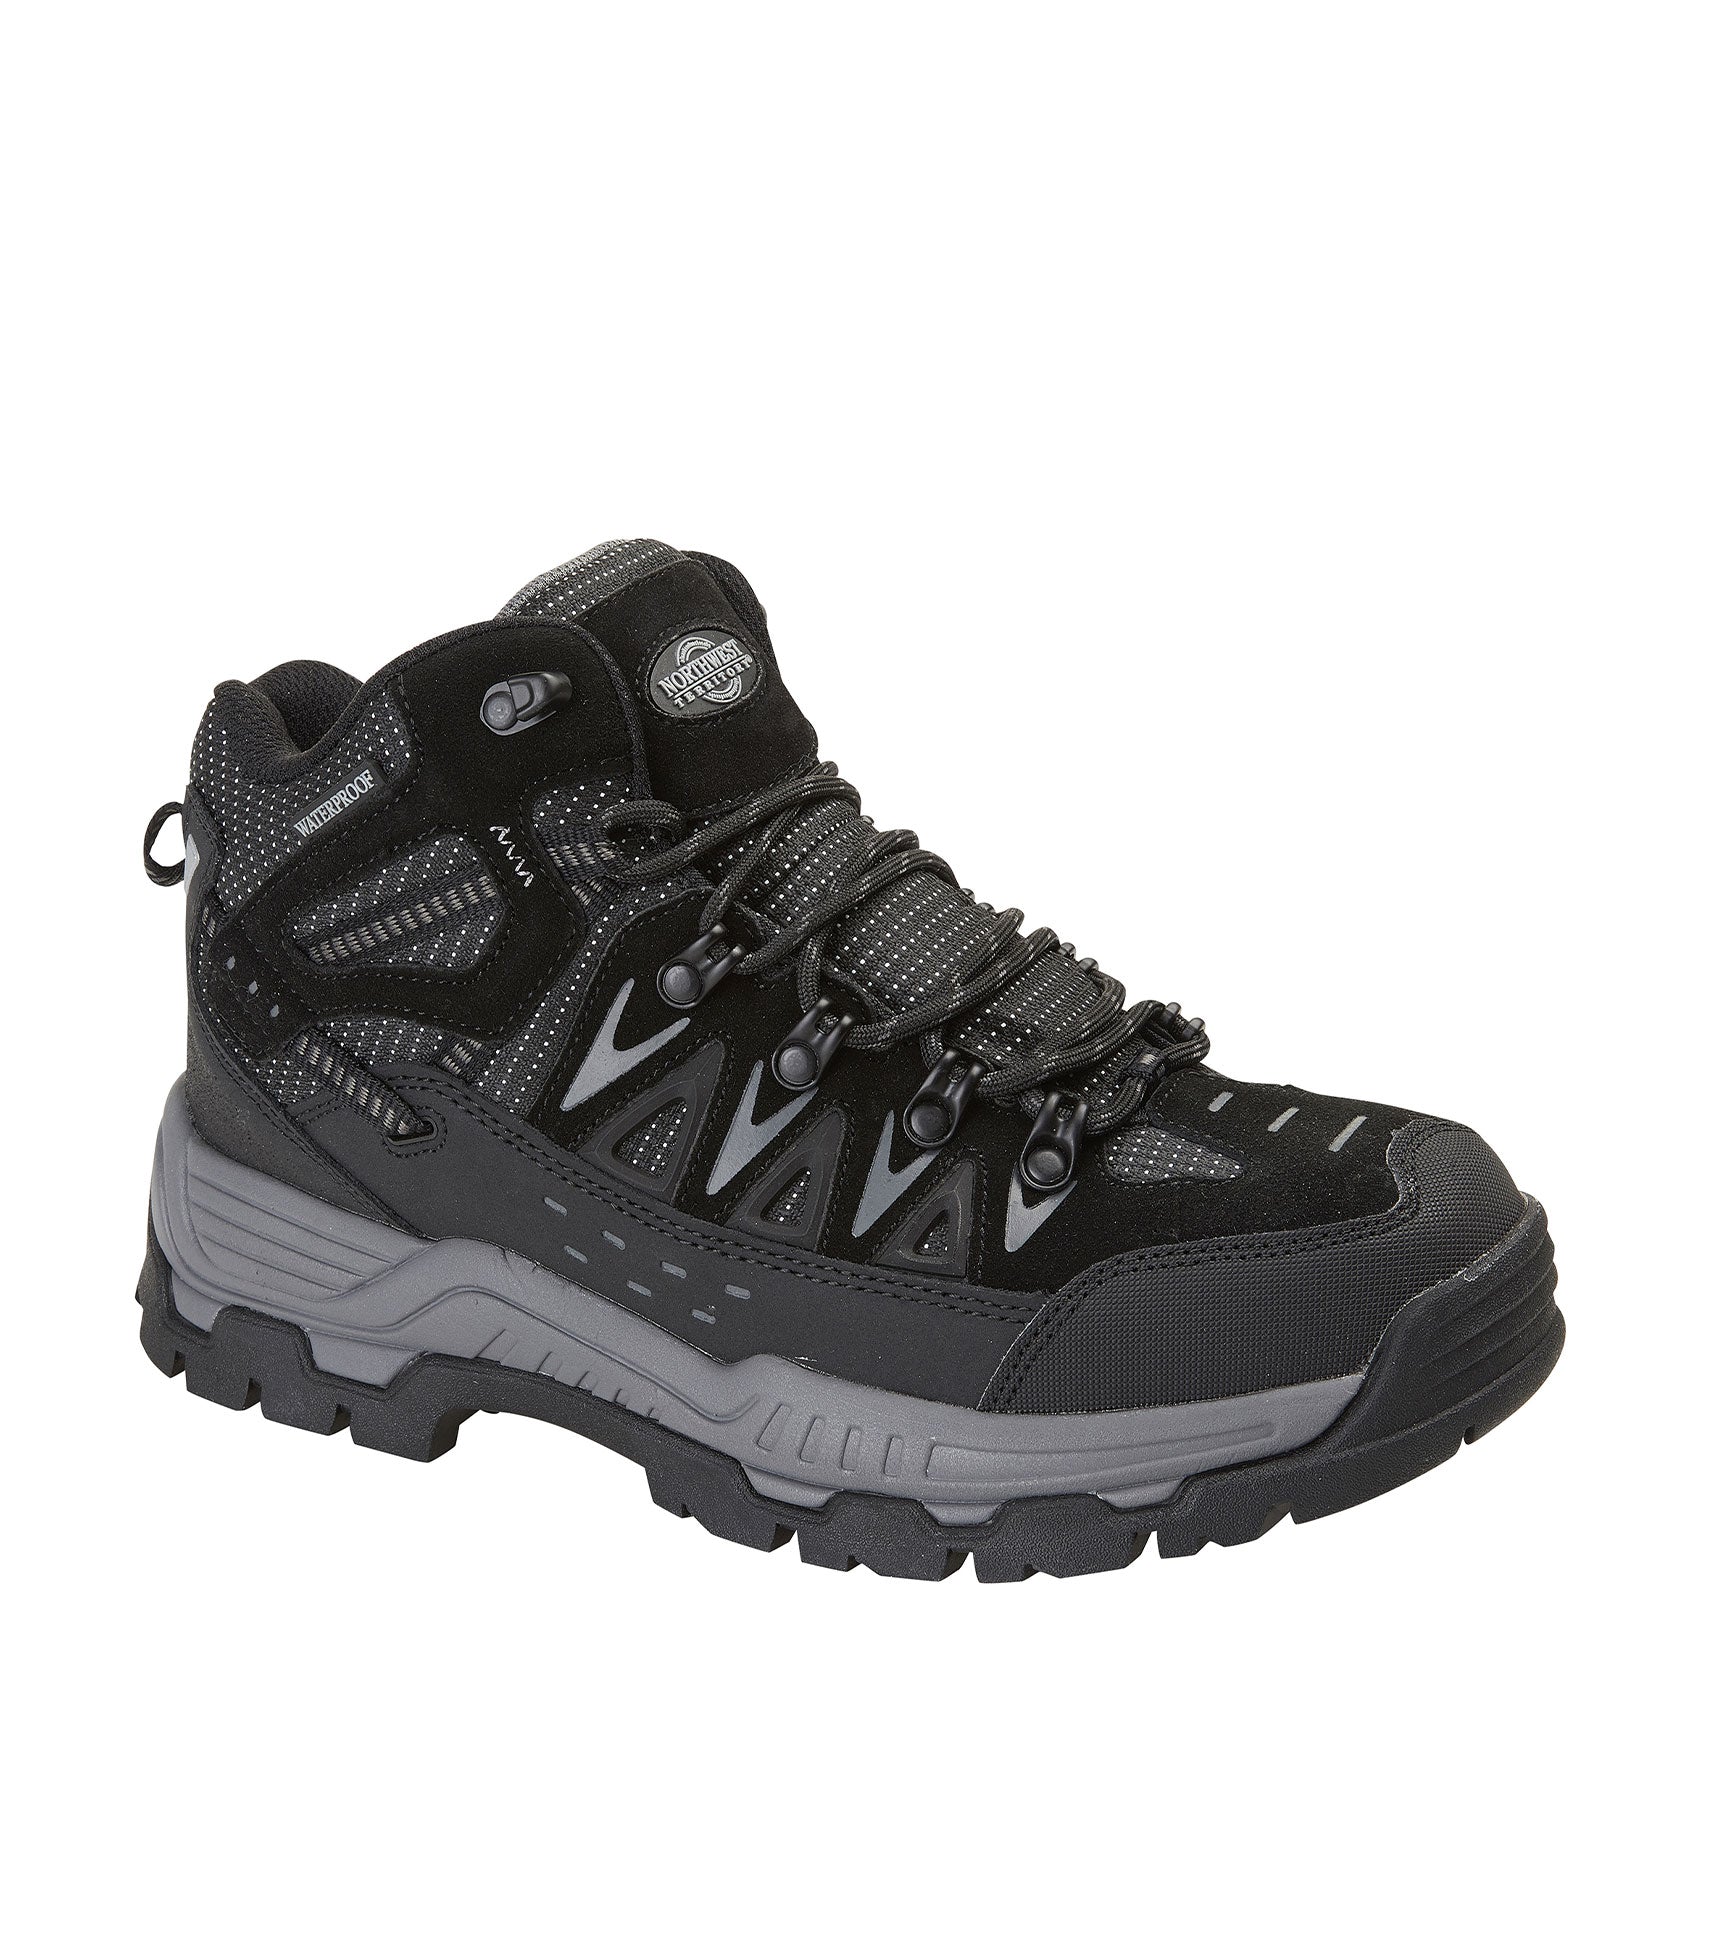 Men's Waterproof Walking Boots